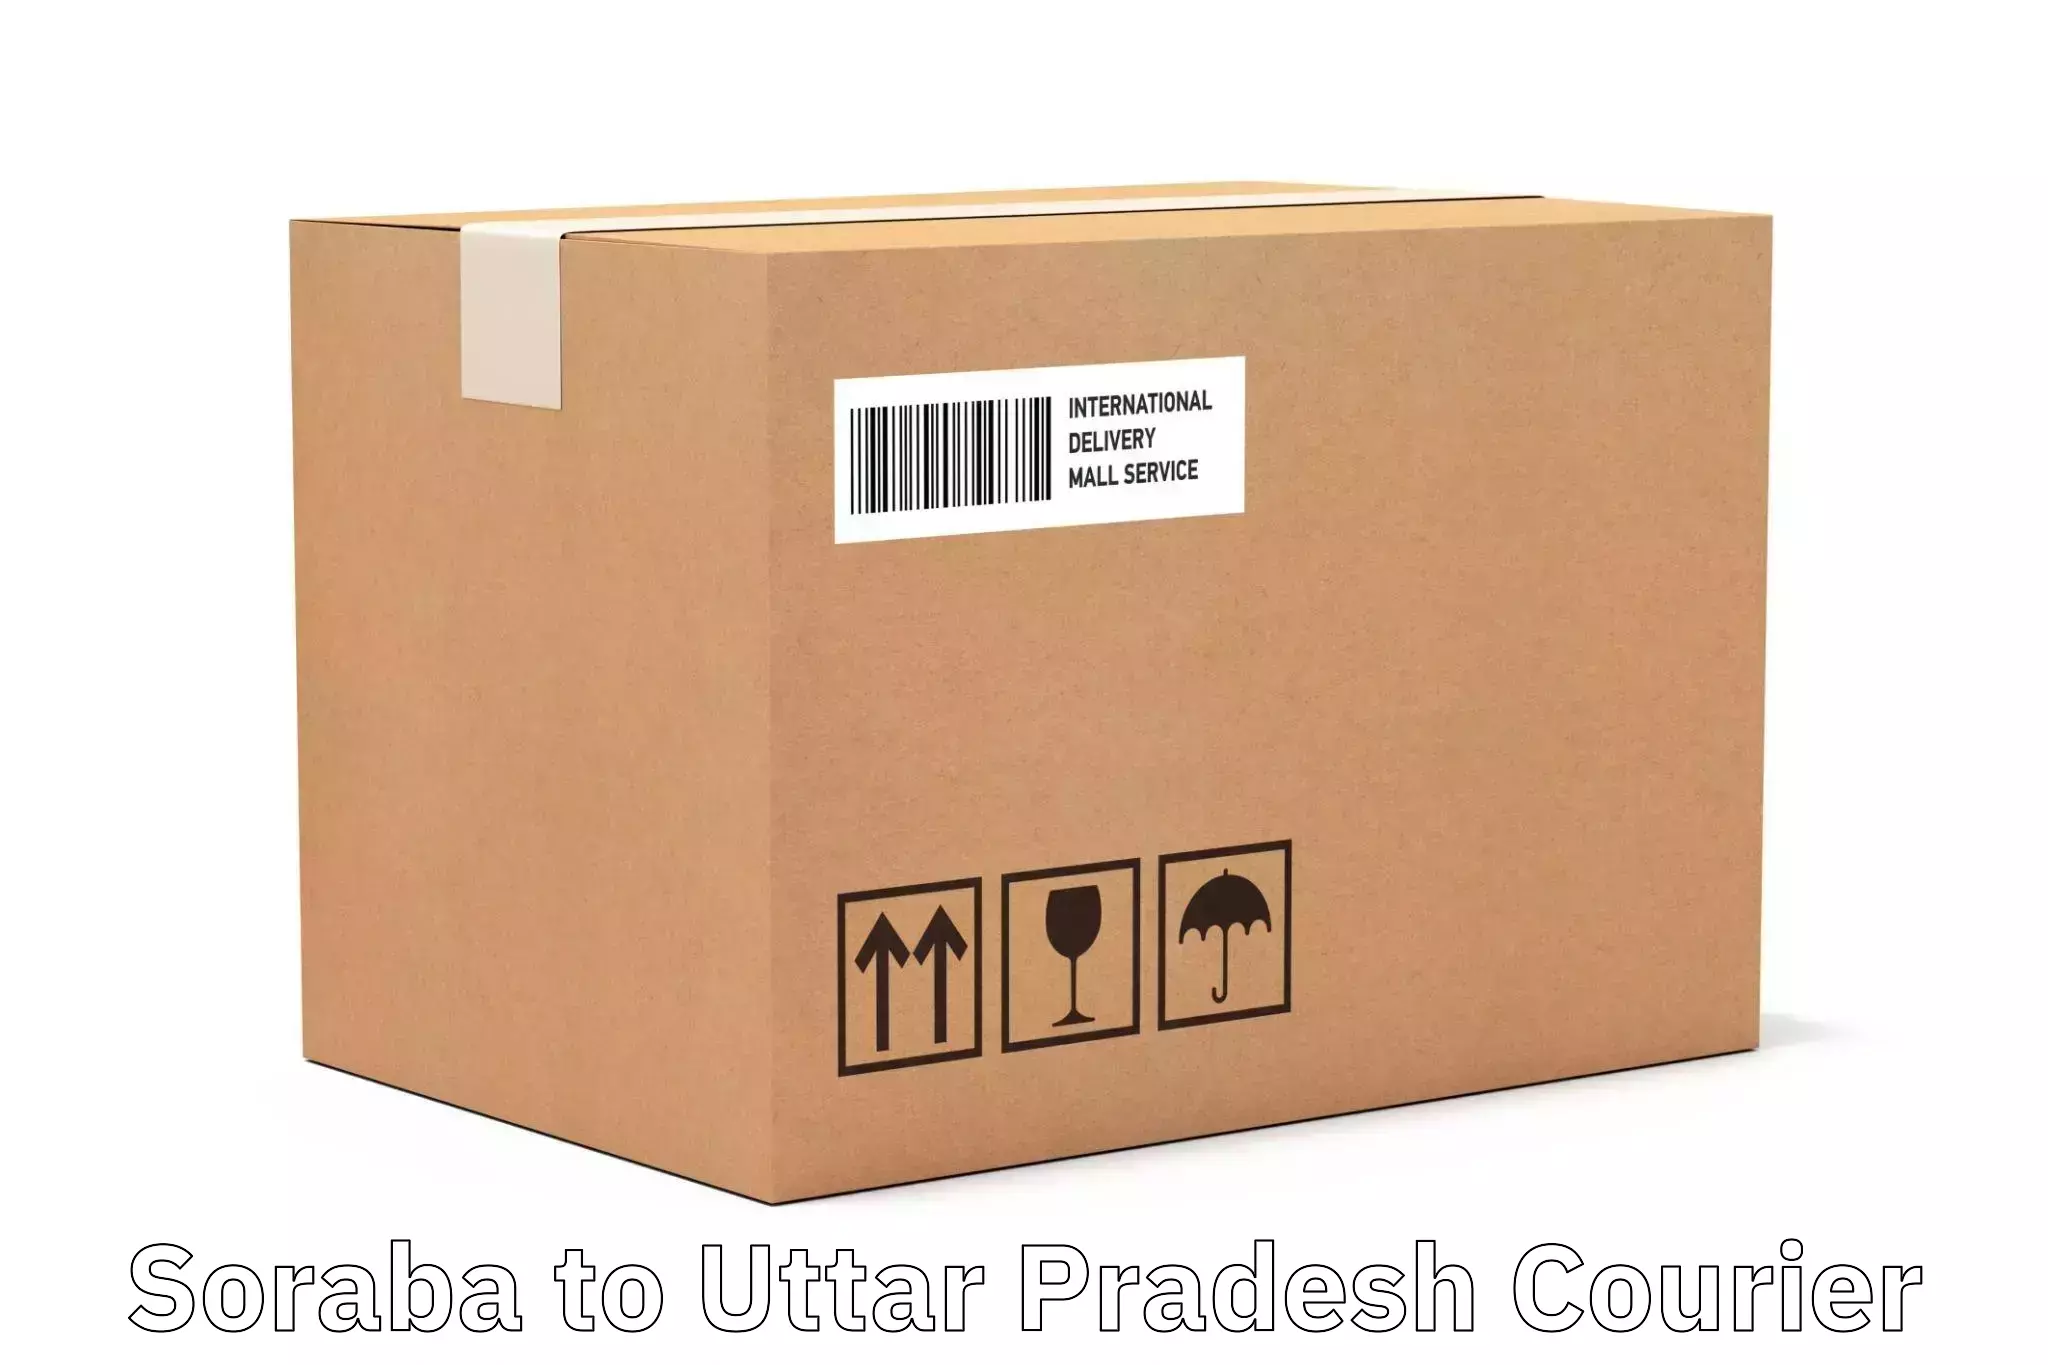 Global courier networks Soraba to Uttar Pradesh